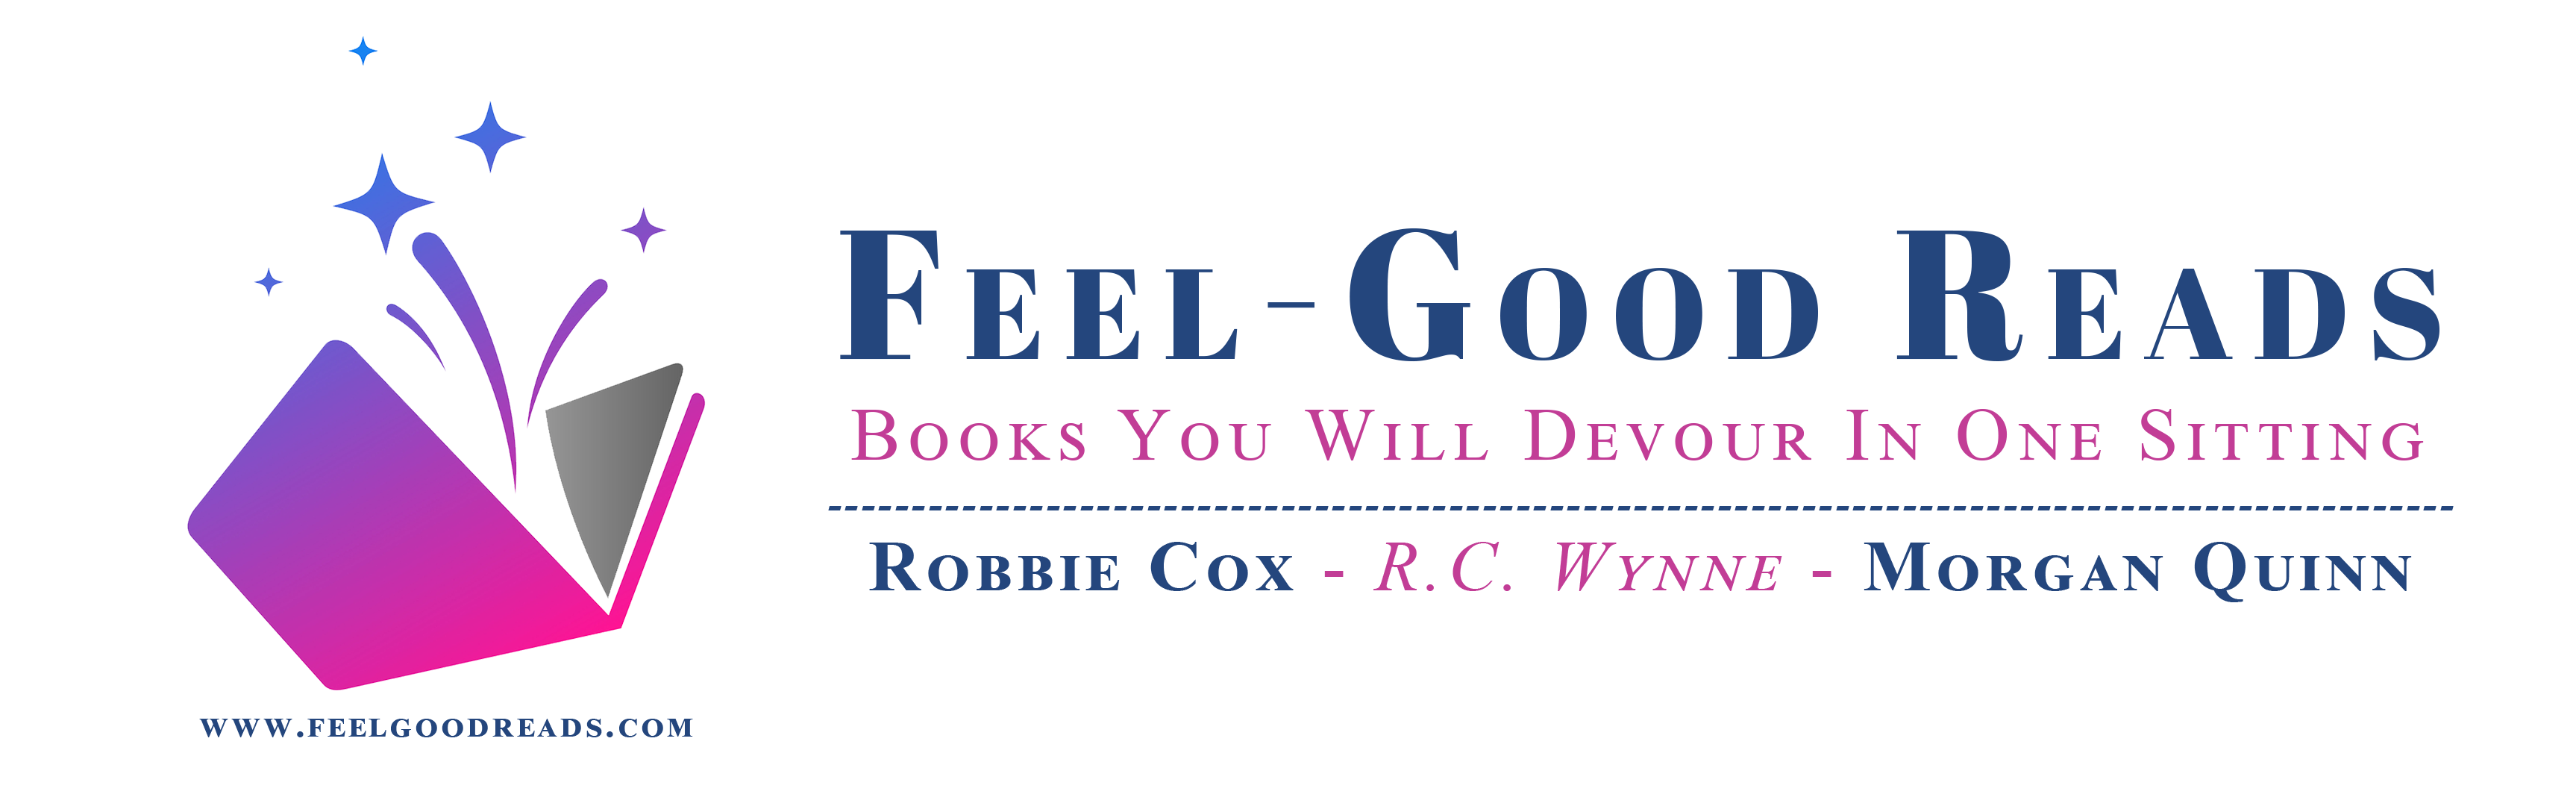 Feel-Good Reads